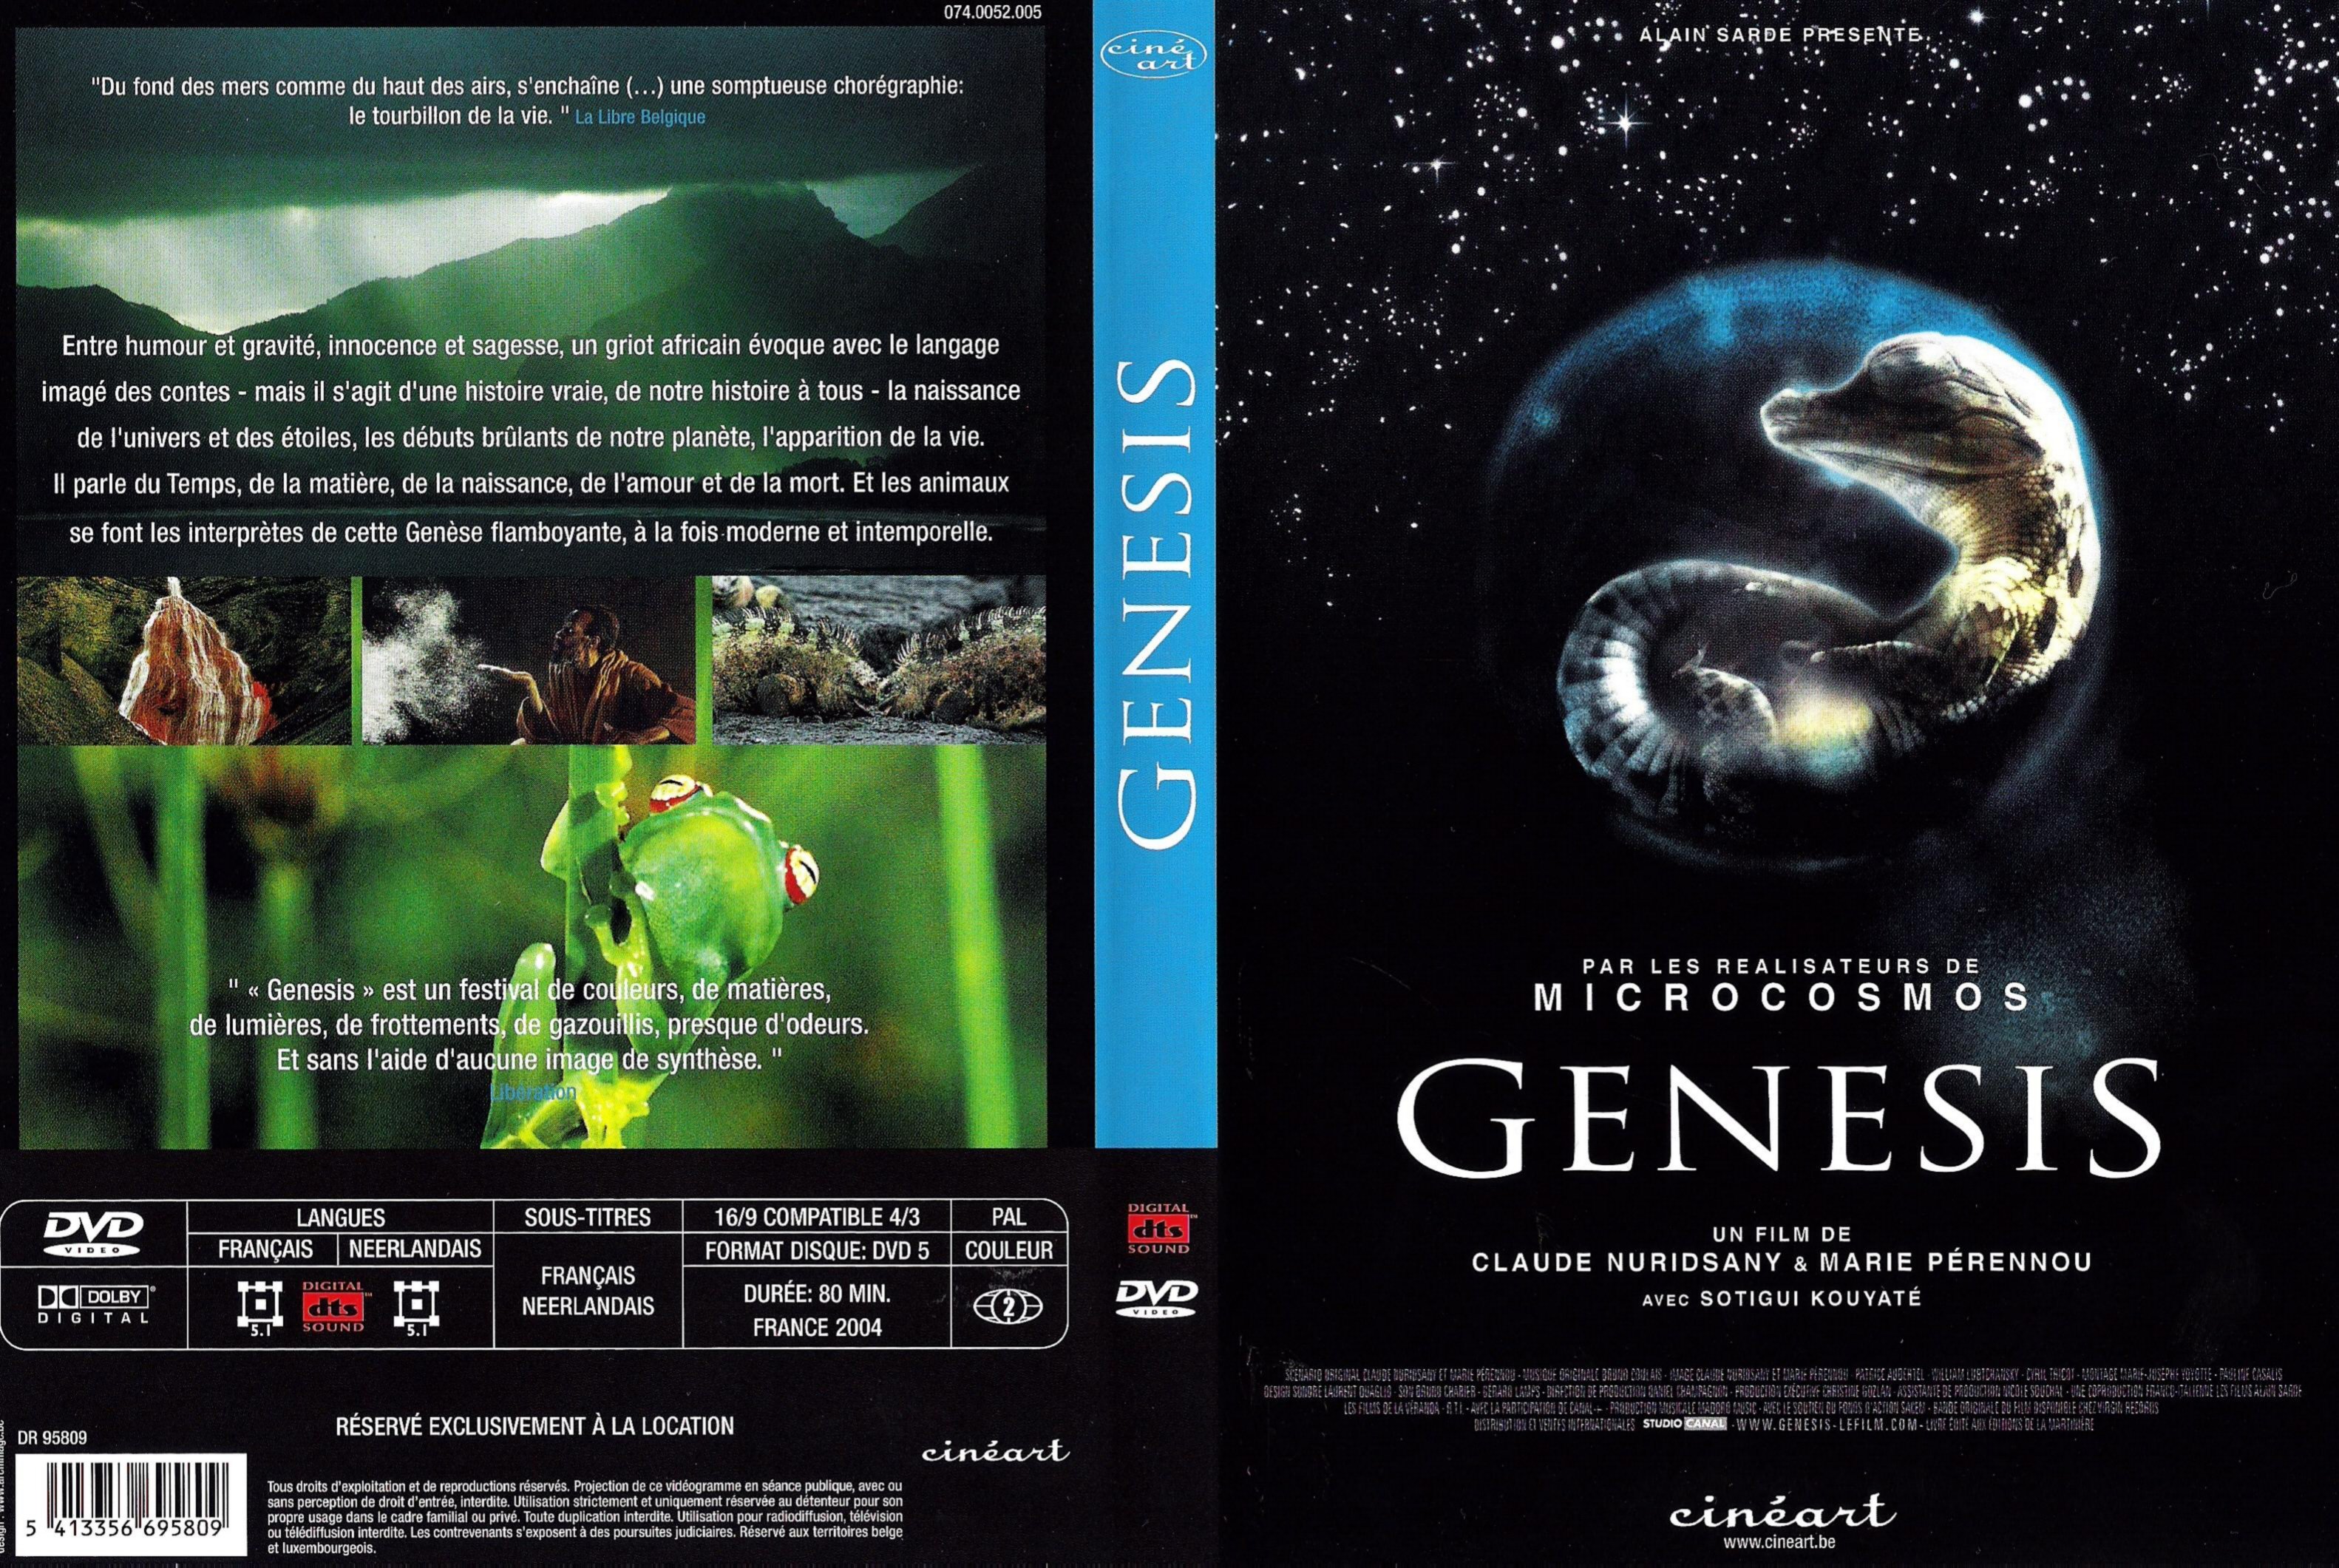 Jaquette DVD Genesis